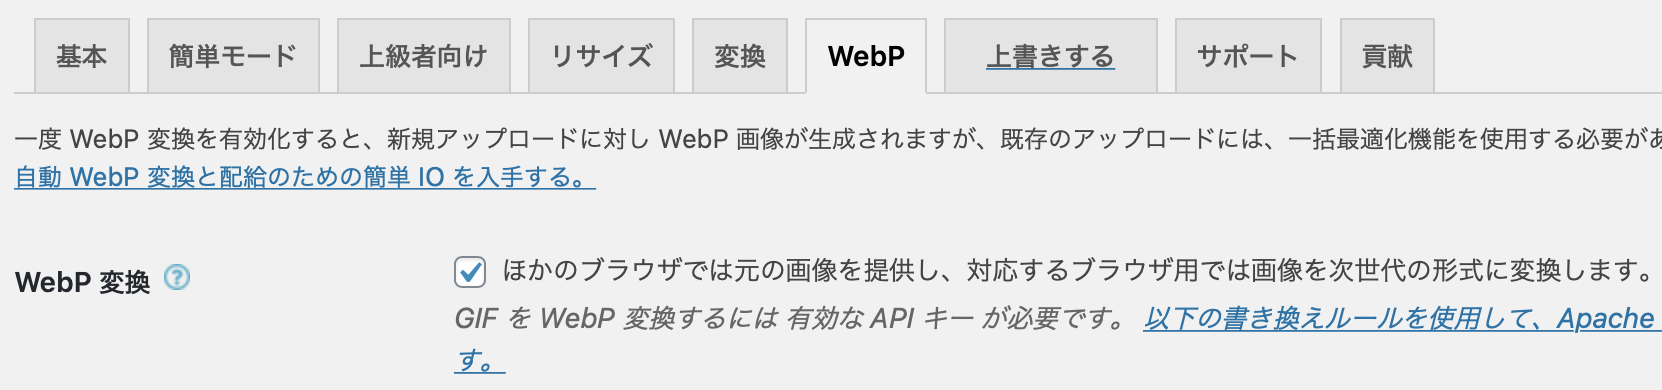 EWWW Image Optimizer設定画面(WebP)